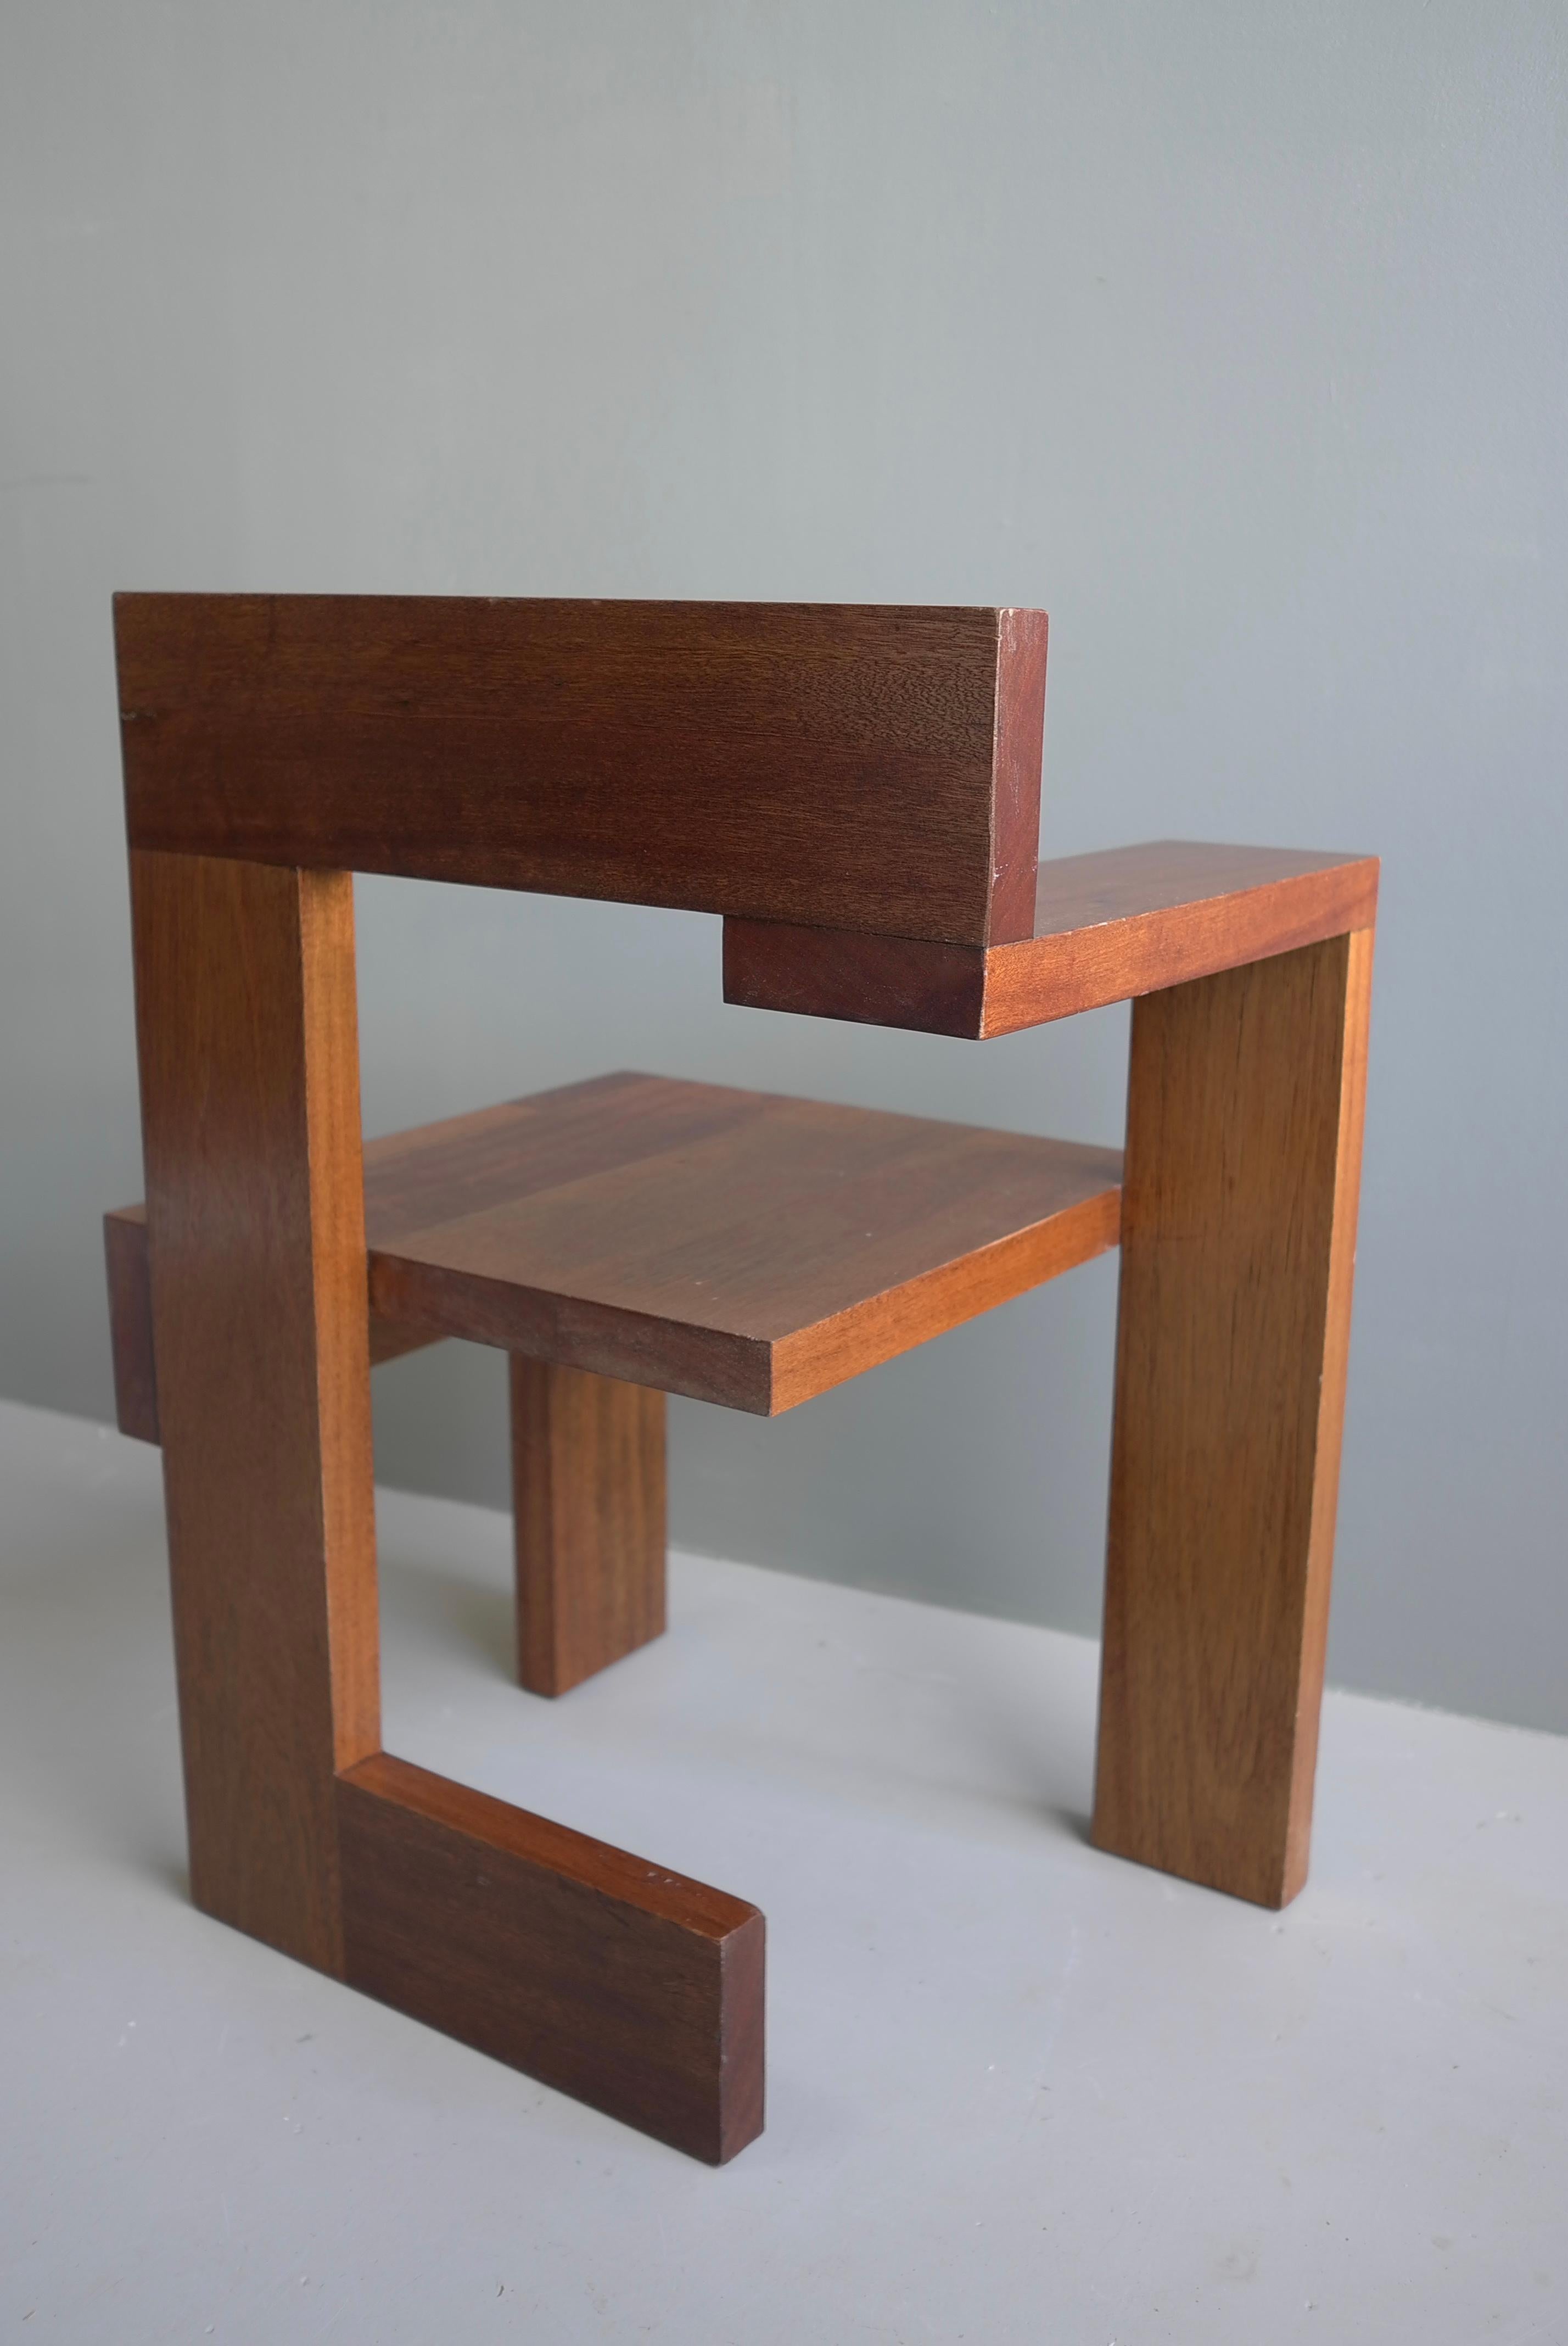 Modernist Sculptural Steltman Chair in Meranti Wood, in Style of Gerrit Rietveld 1